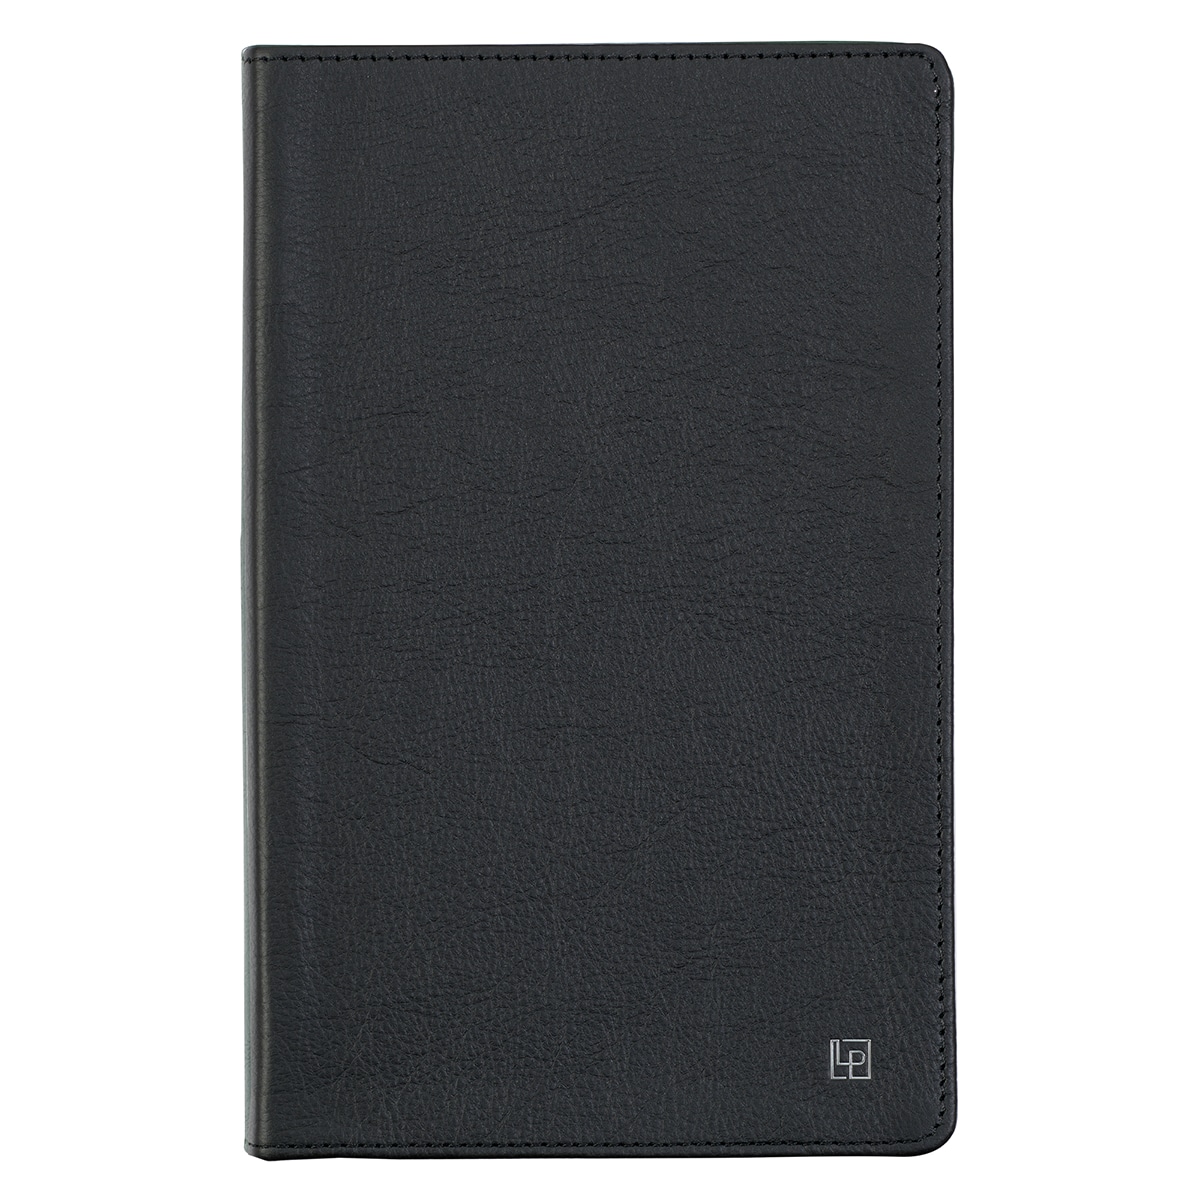 Tuxedo Black Leather Journal